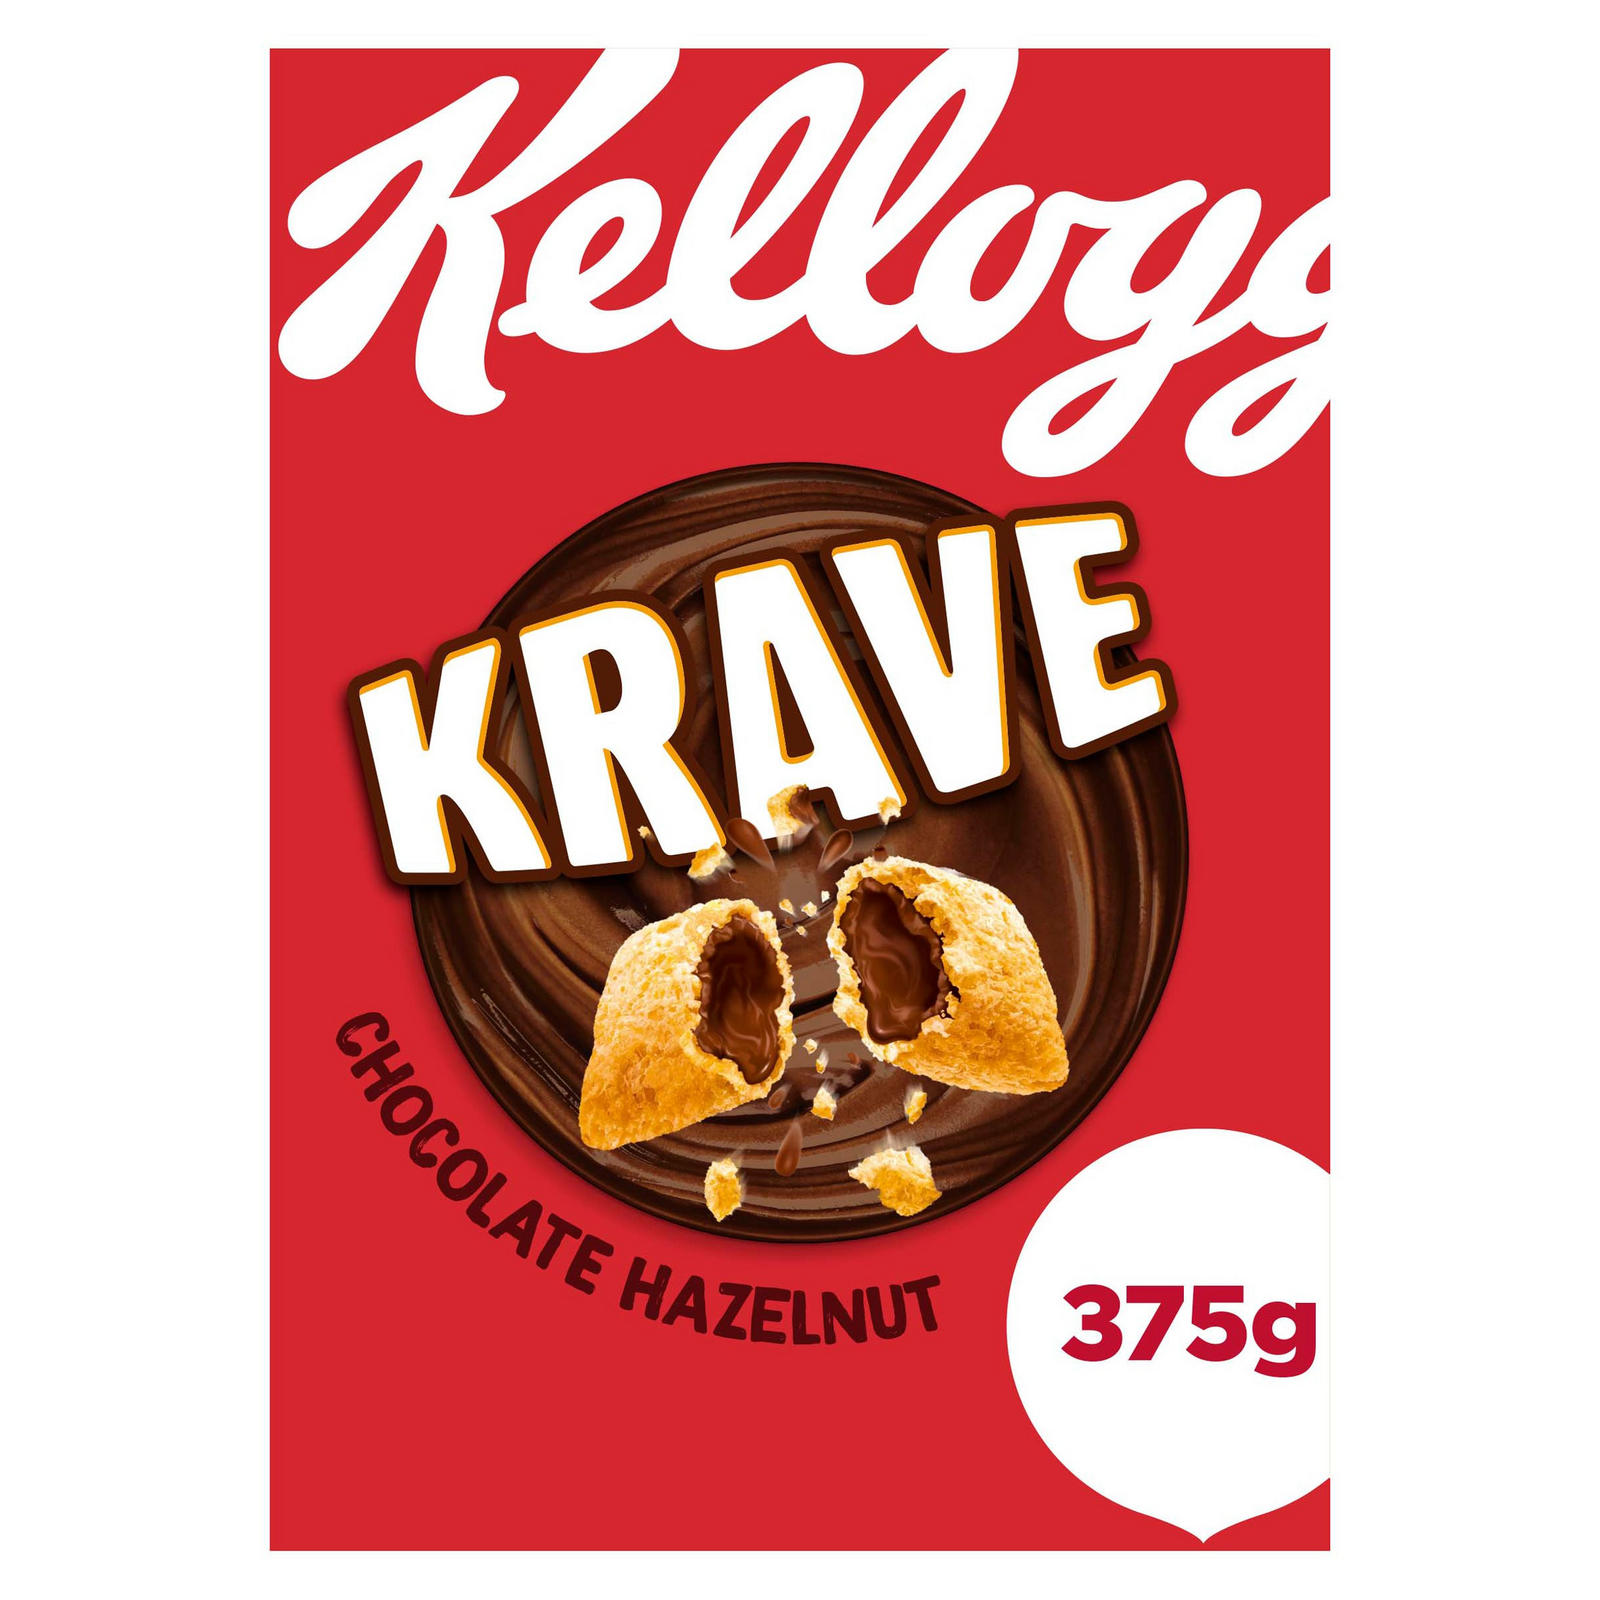 Kellogg’s Krave chocolate hazelnut